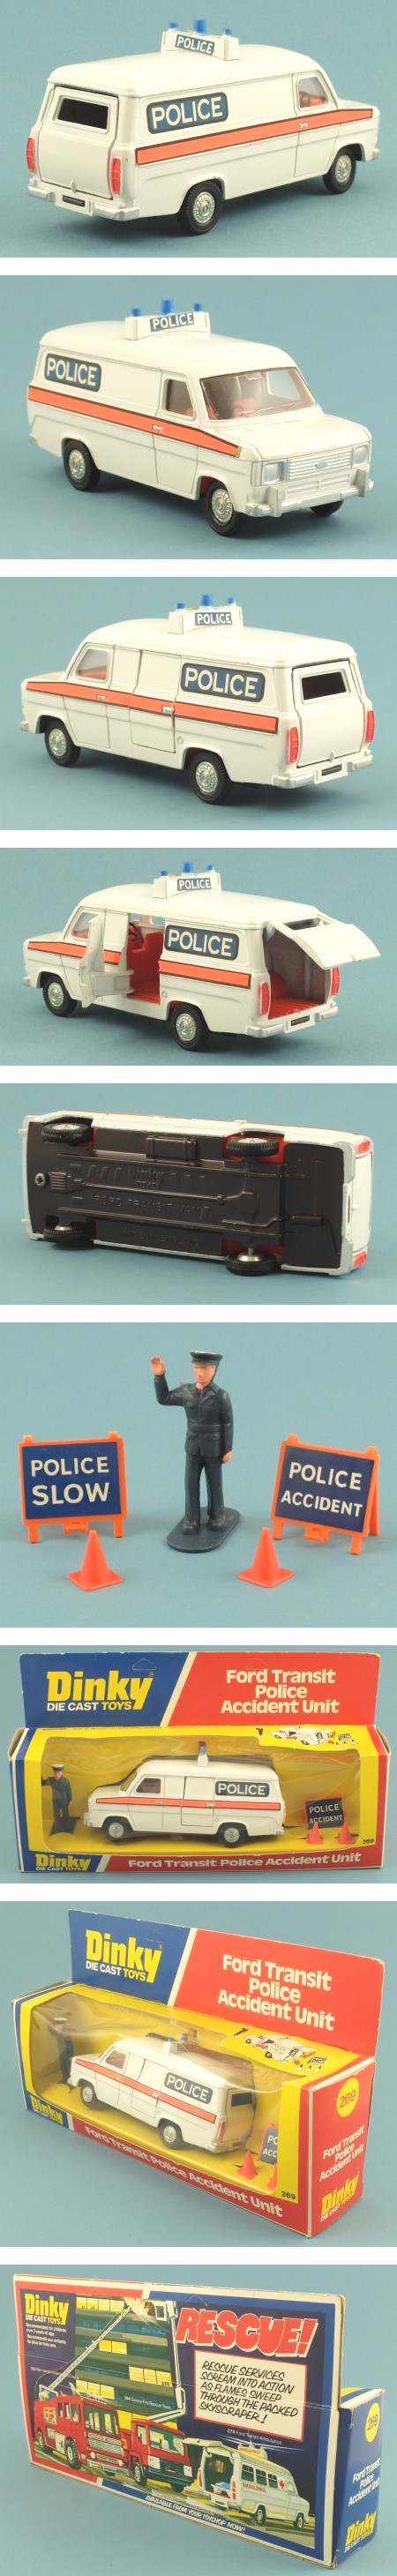 269 Ford Transit Police Van